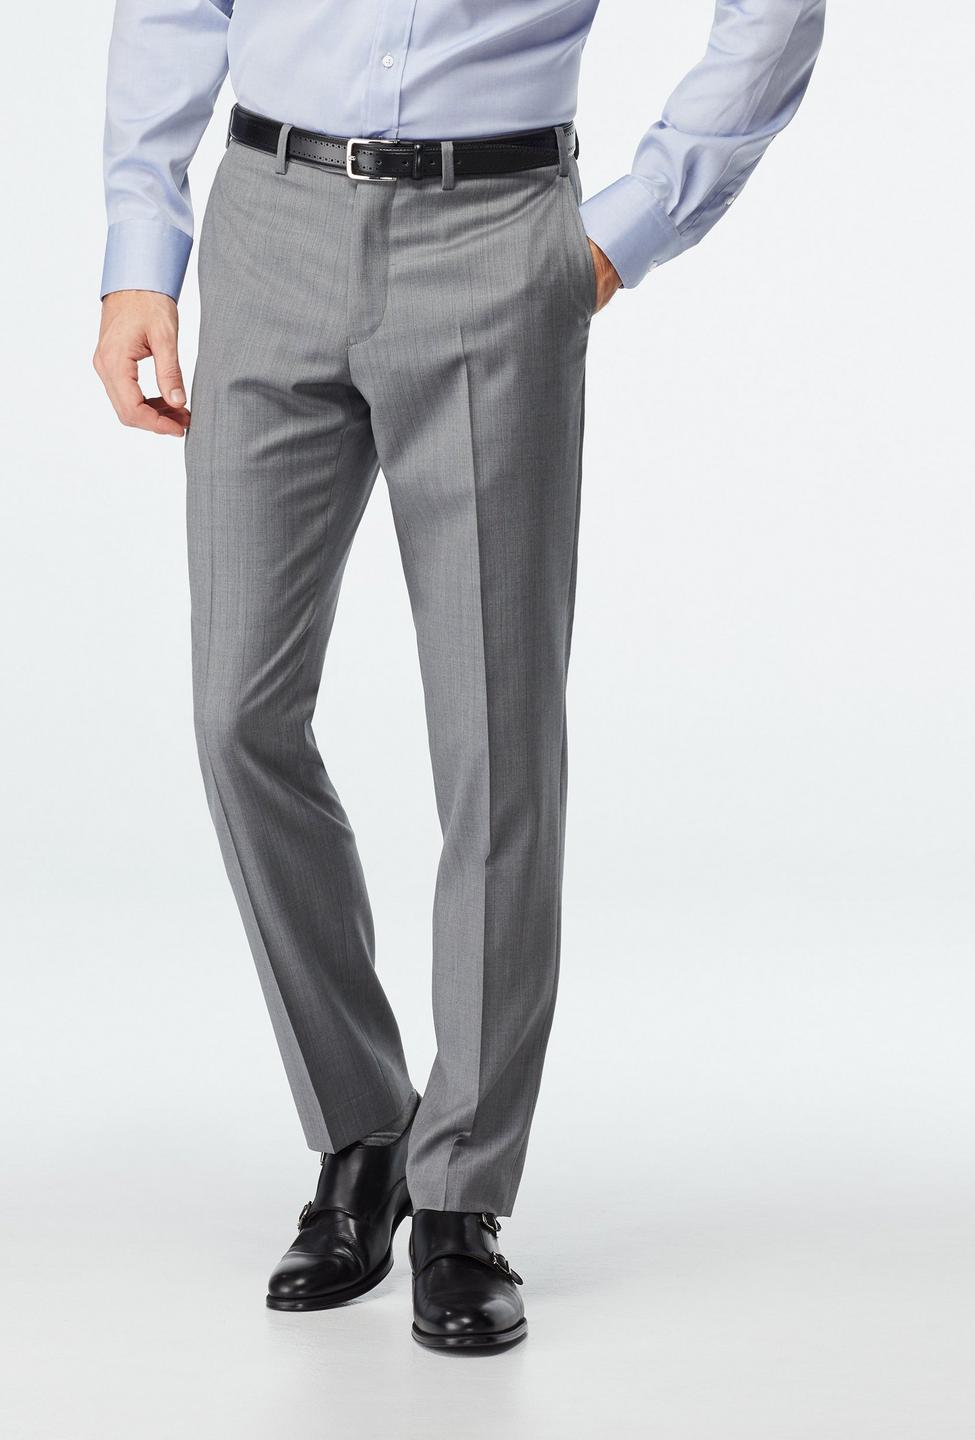 Hemsworth Stripe Gray with Blue Pants